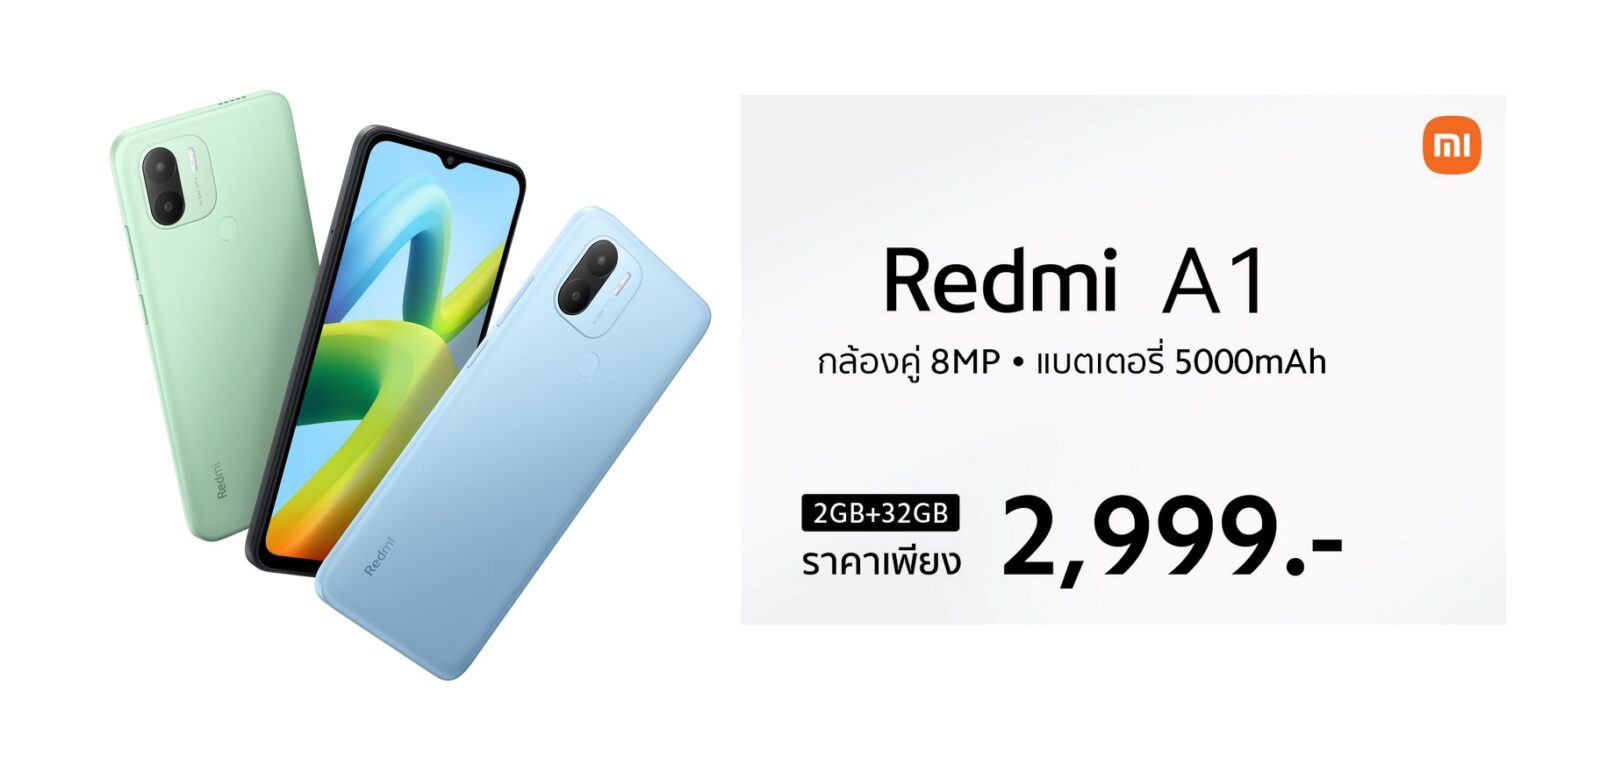 Redmi A1 15 1 | Redmi A1 | Redmi A1 สมาร์ทโฟนประหยัดสุด 2,999 บาท จอใหญ่ 6.52 นิ้ว กล้องคู่ 8MP และแบตขนาด 5,000mAh